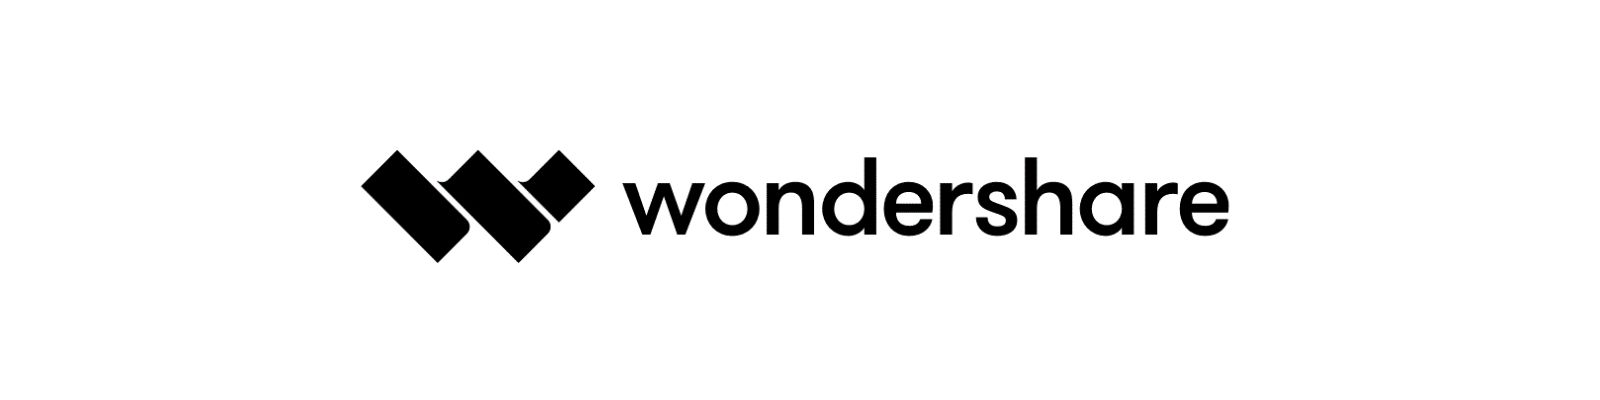 WhatsApp Wondershare: Telefones e Canais de atendimento!